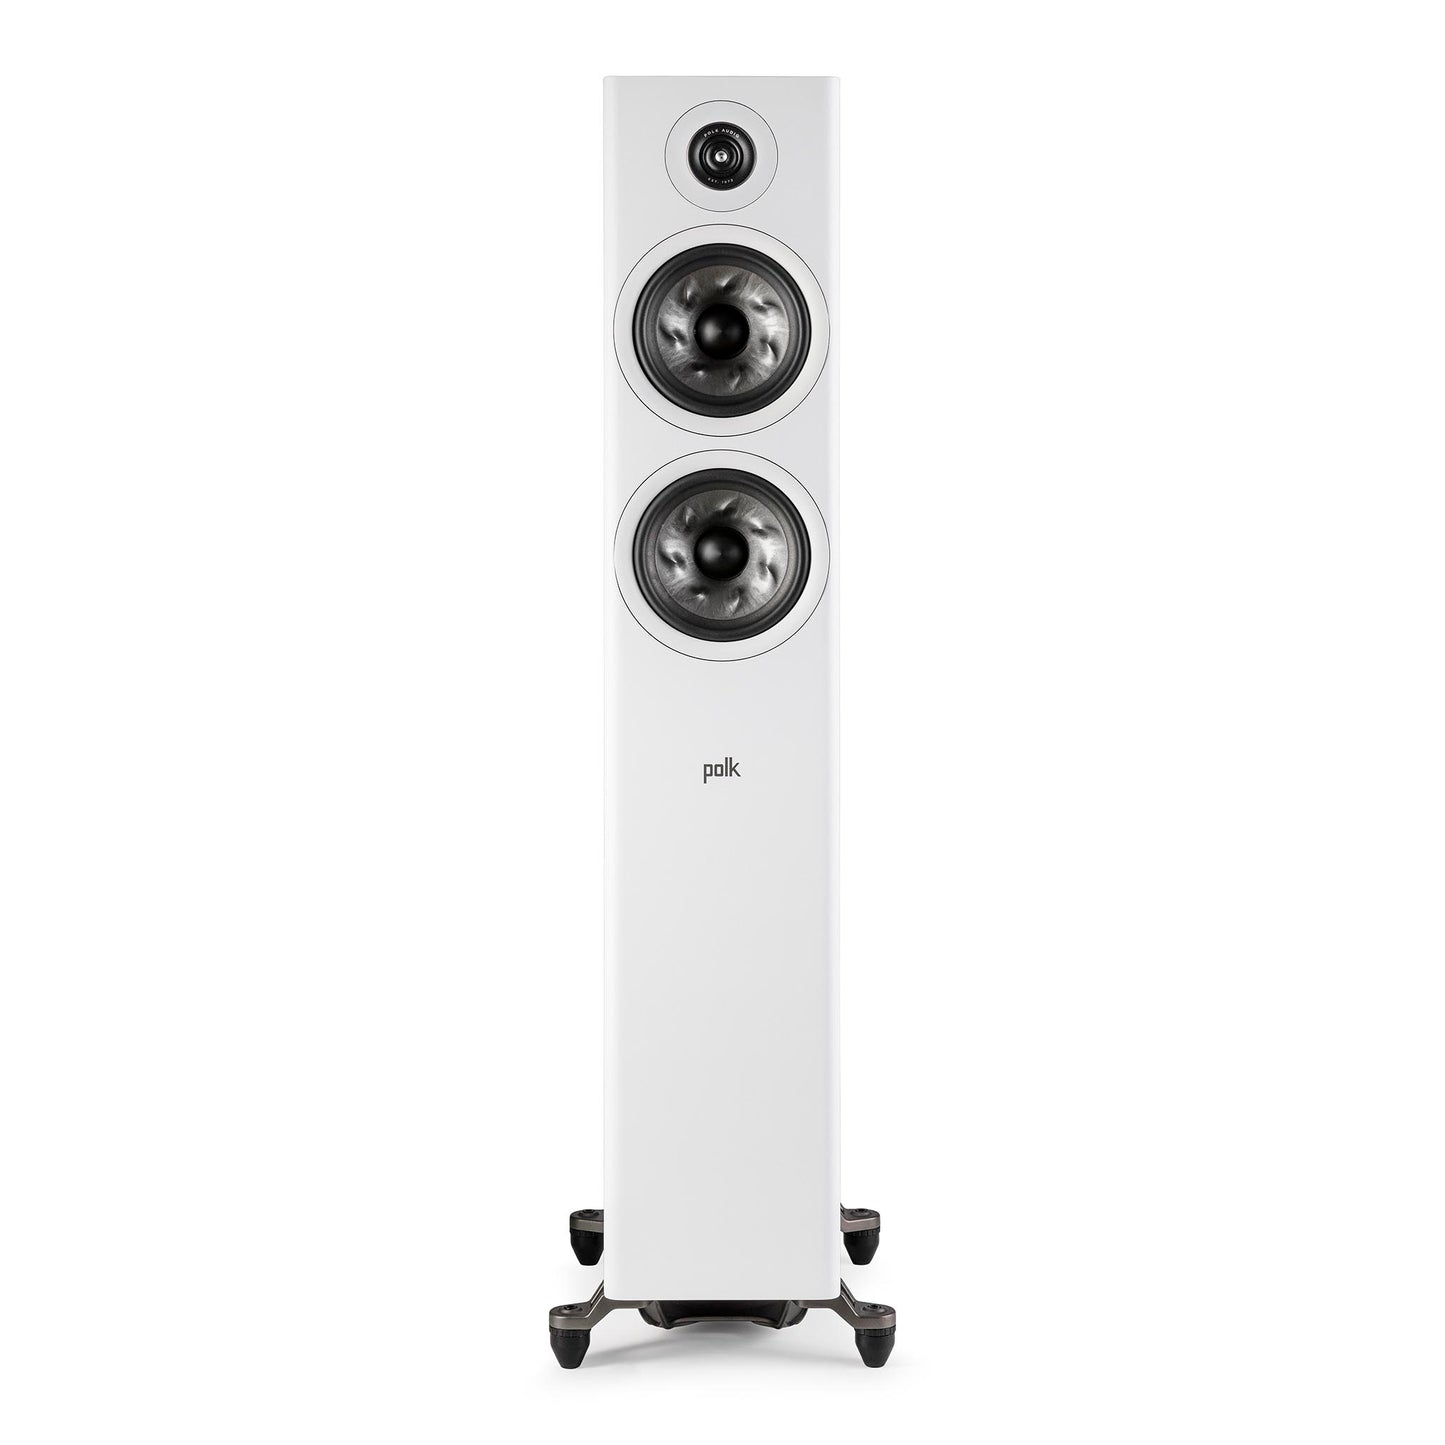 Polk Audio Reserve R600 Floorstanding Loudspeaker (each)